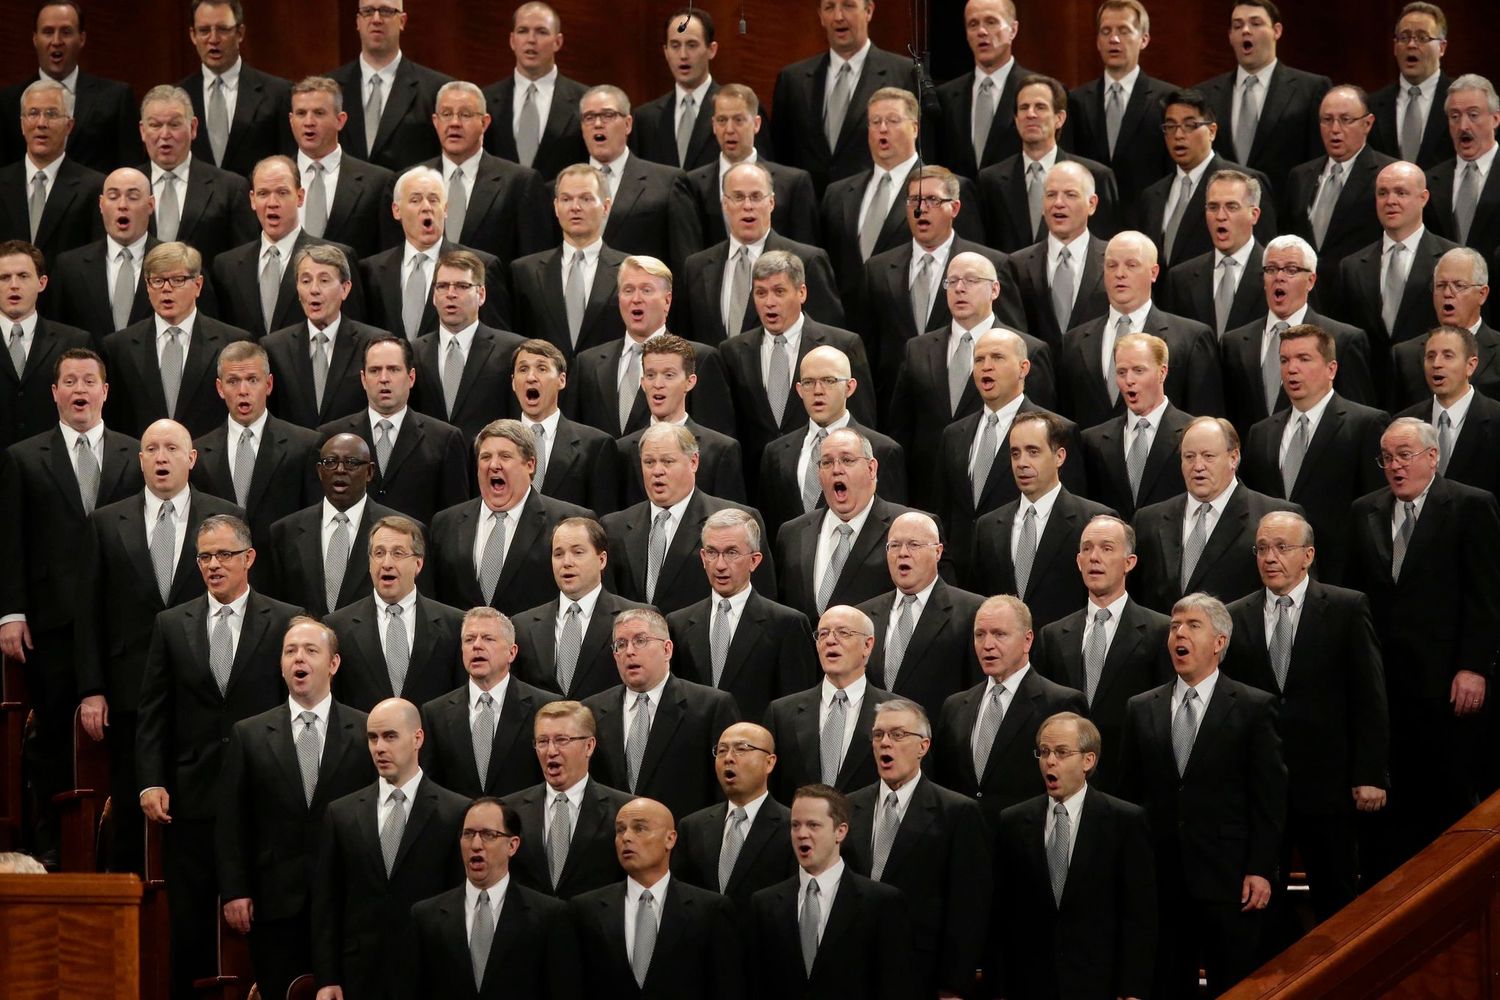 Why Was Mormon Tabernacle Choir Wearing Plaid?